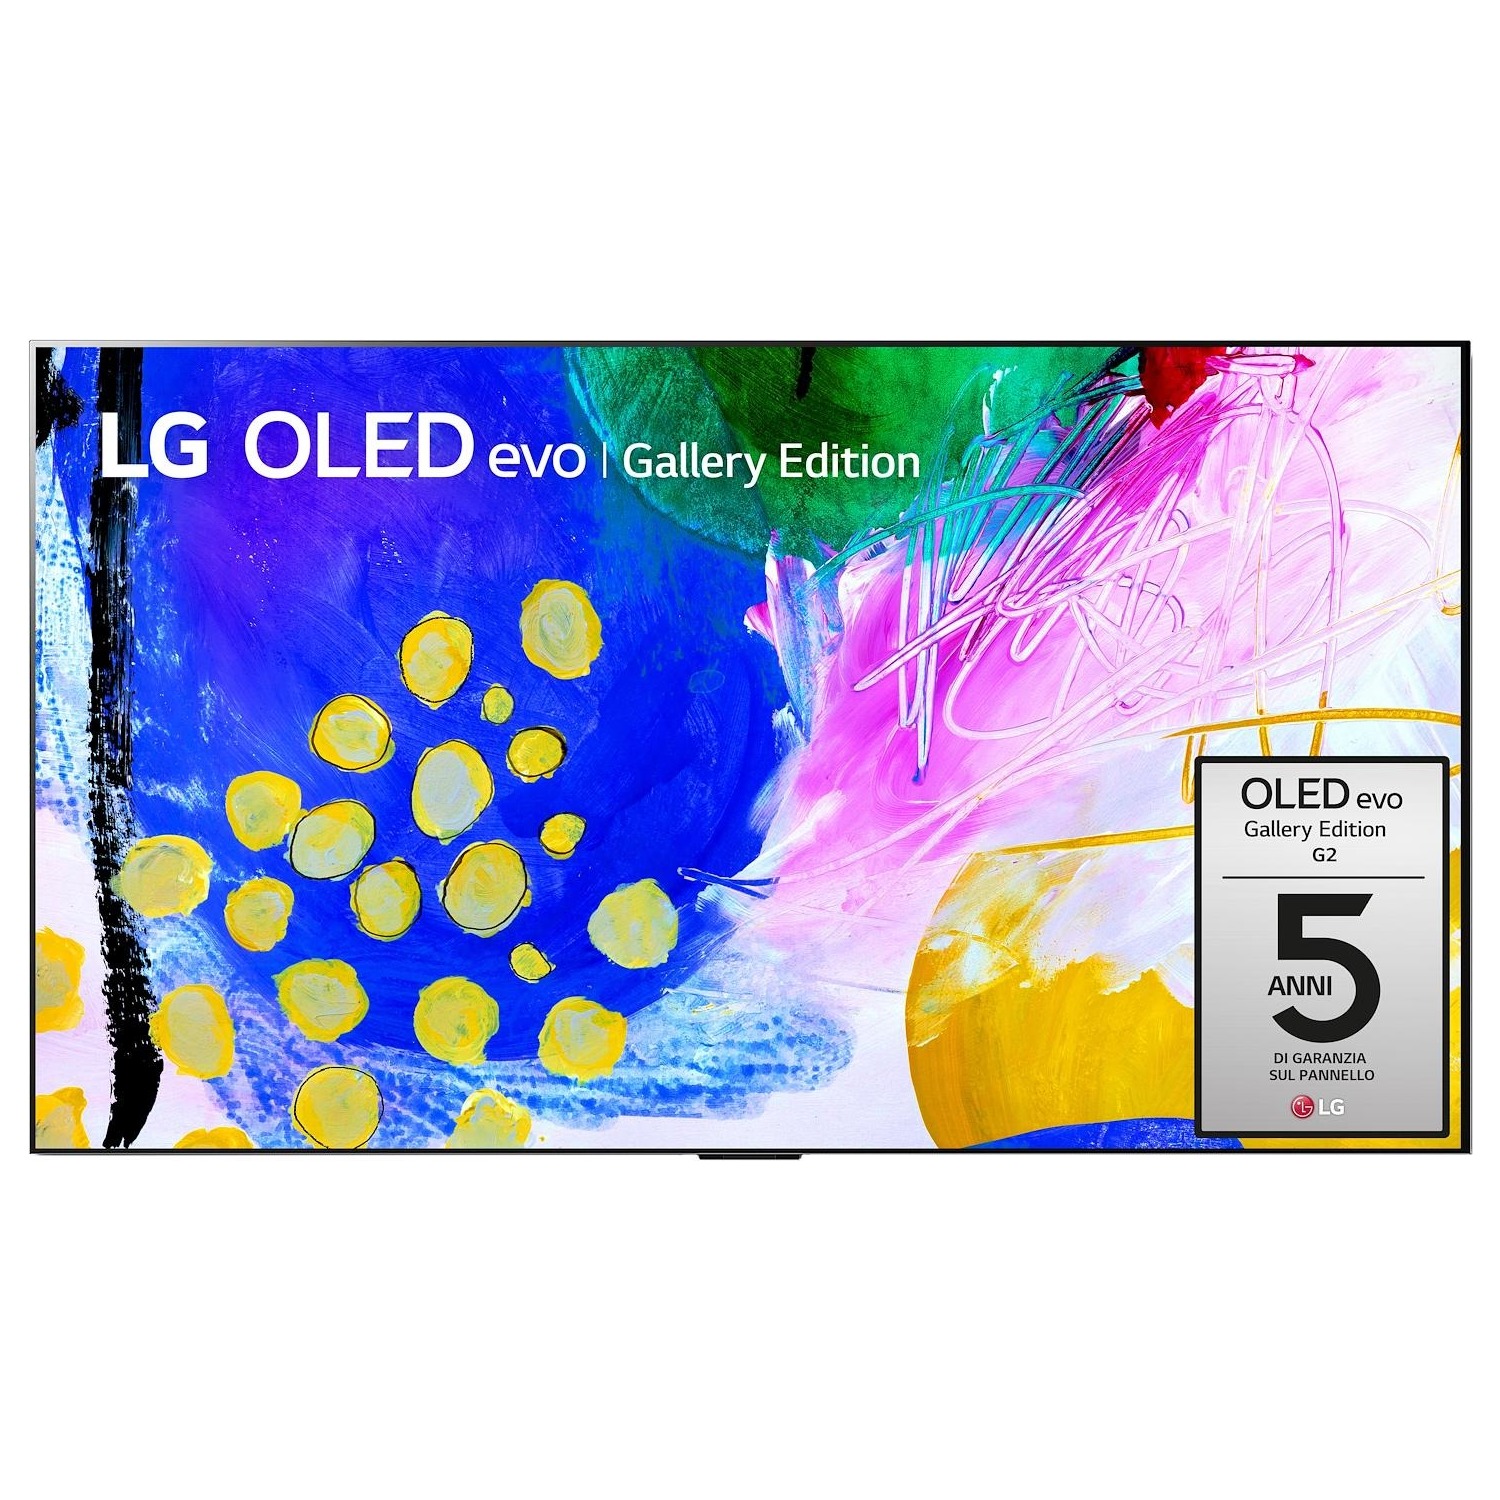 Immagine per TV OLED LG OLED65G26 Calibrato 4K e FULL HD da DIMOStore